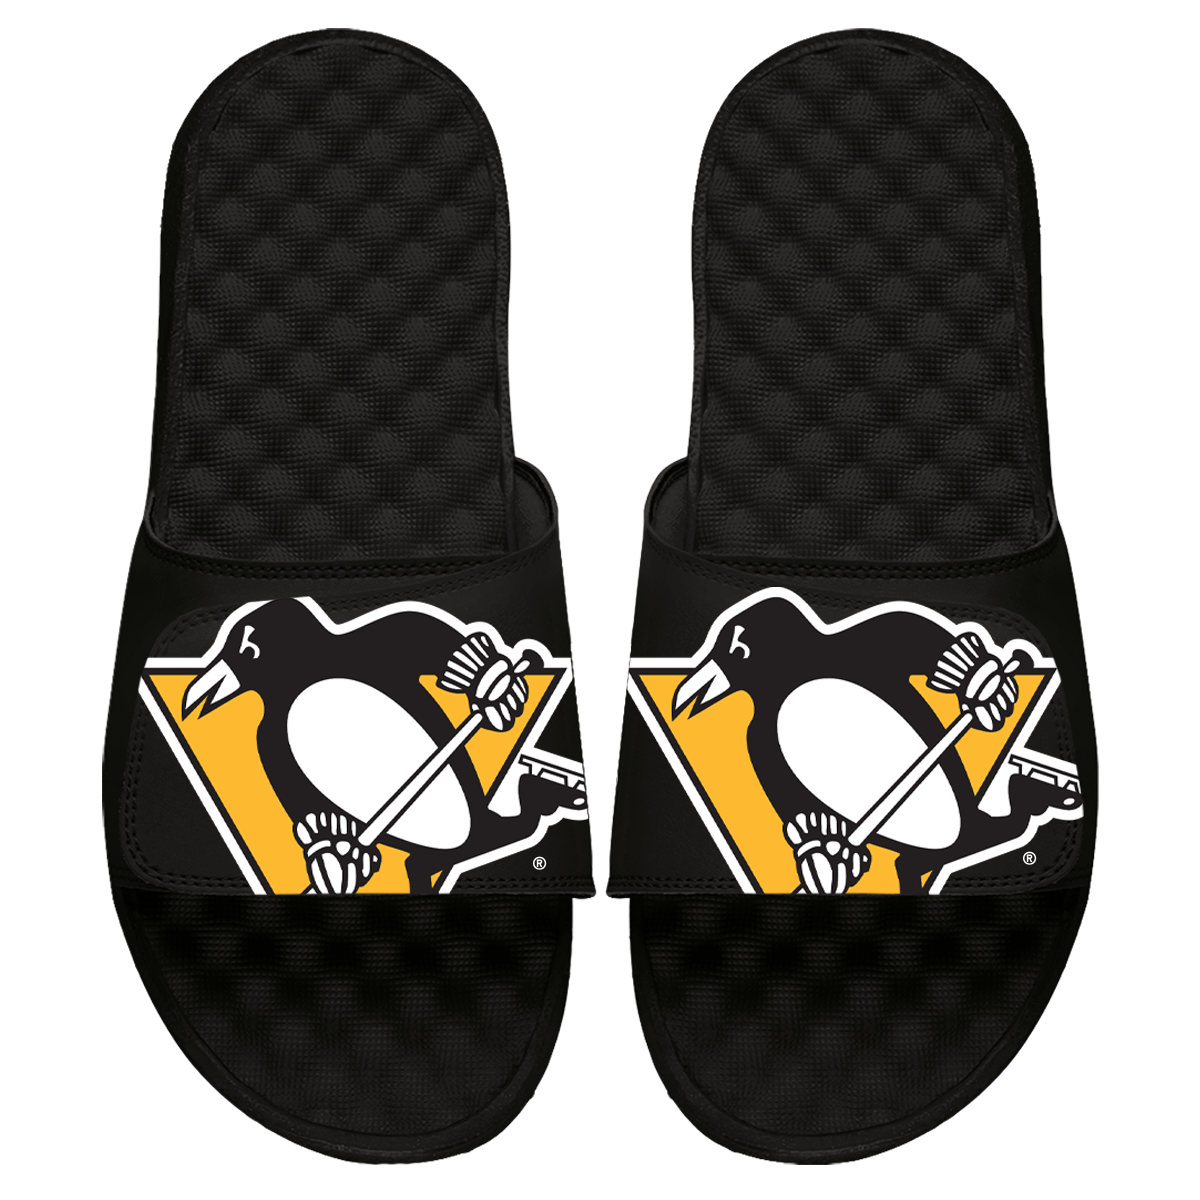 Pittsburgh Penguins Blown Up Slides